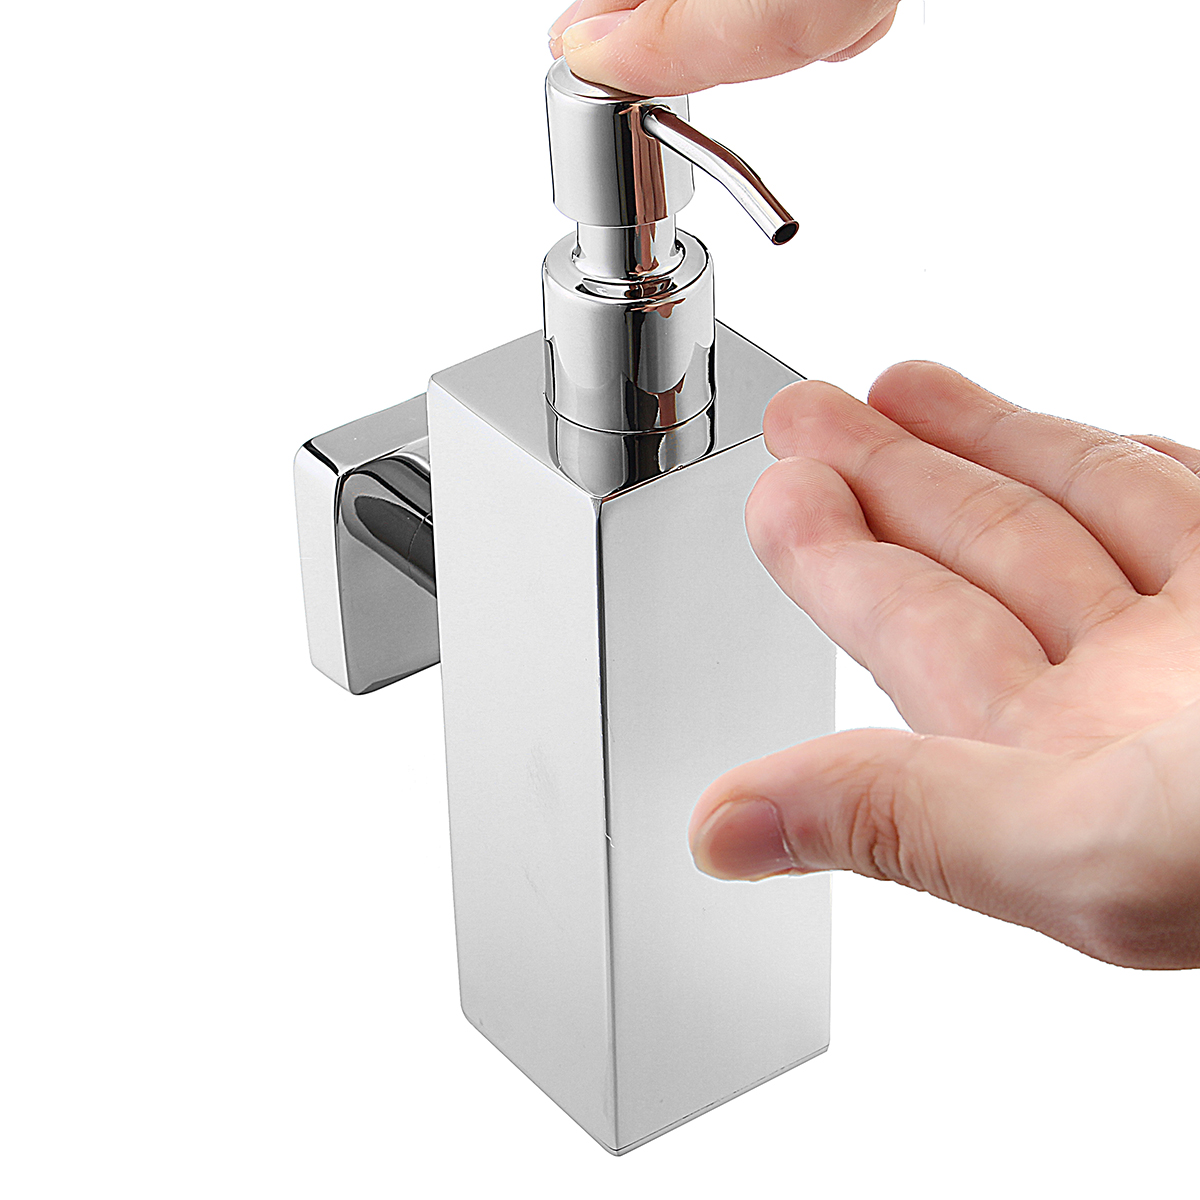 Stainless-Steel-Hand-Soap-Dispenser-Liquid-Bottle-Holder-Wall-Mounted-Bathroom-Storage-1427272-7